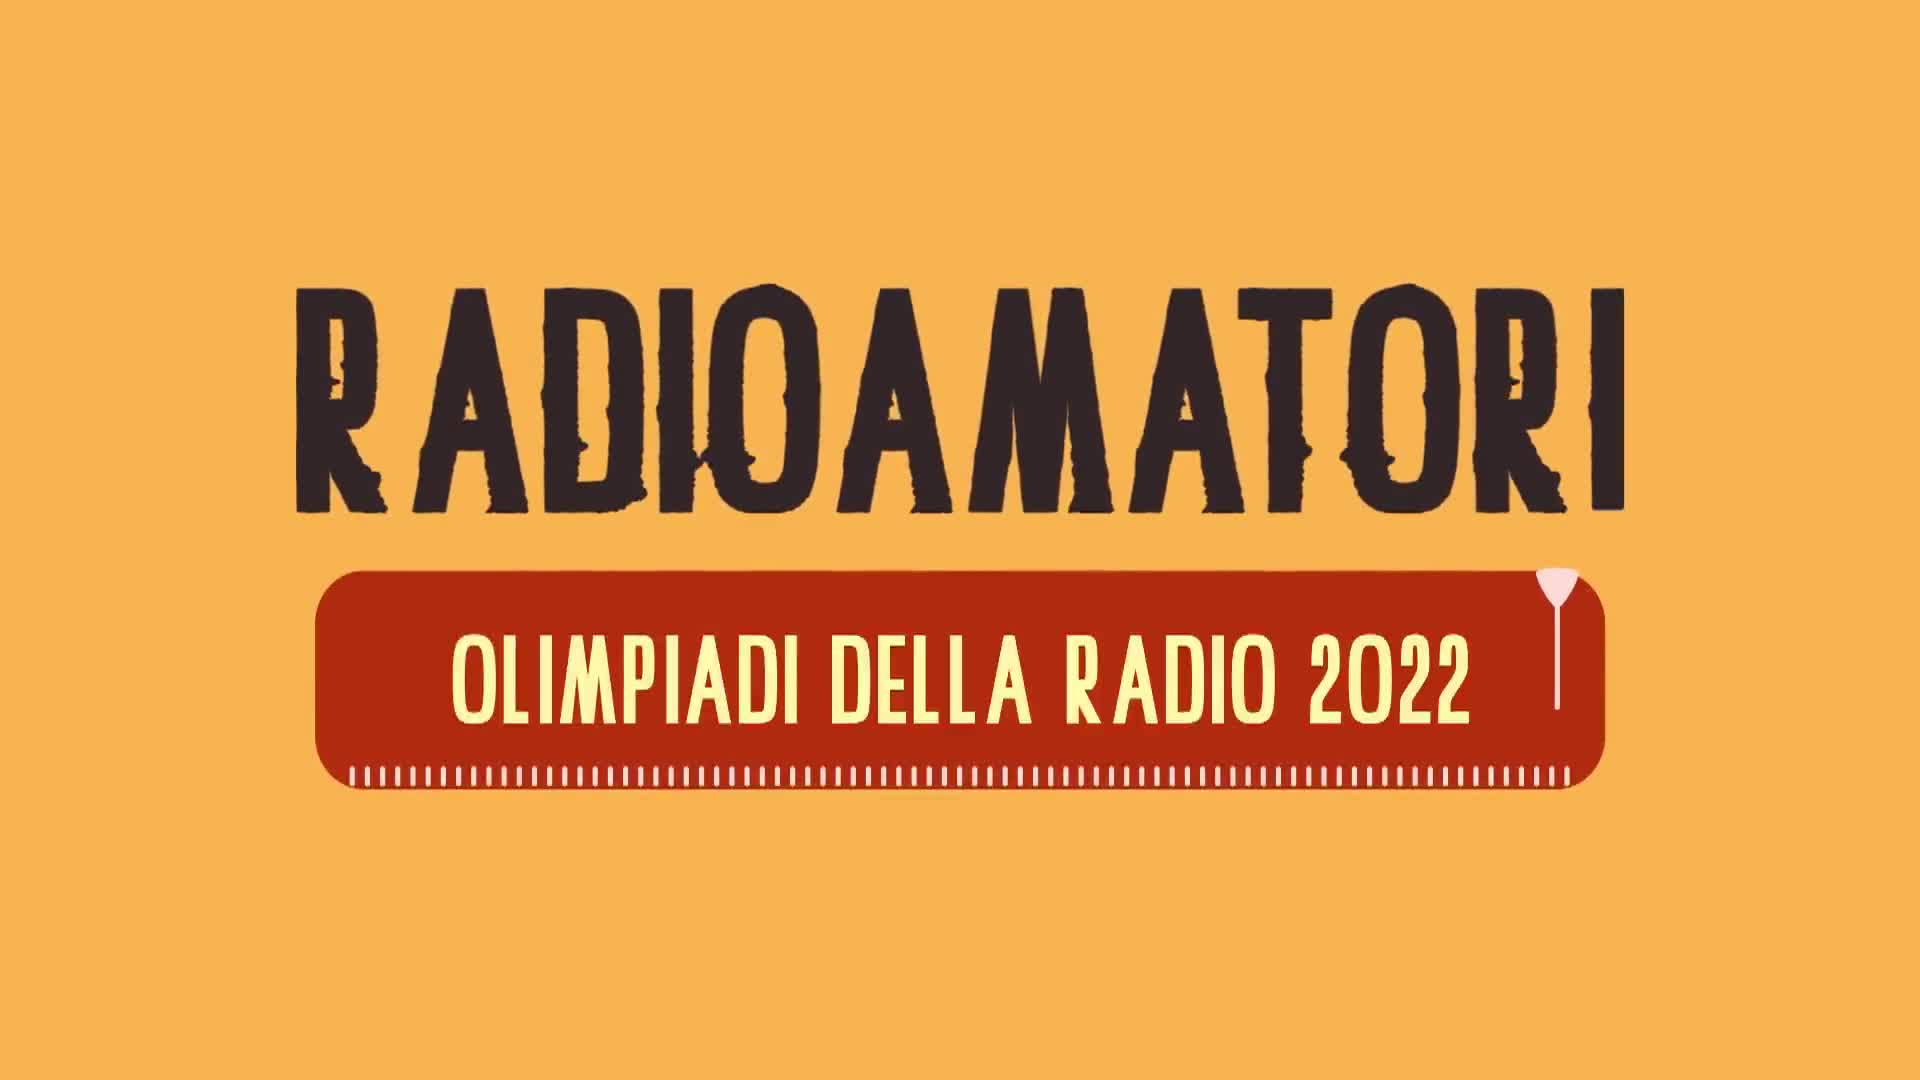 Radioamatori | Olimpiadi della Radio 2022 - immagine